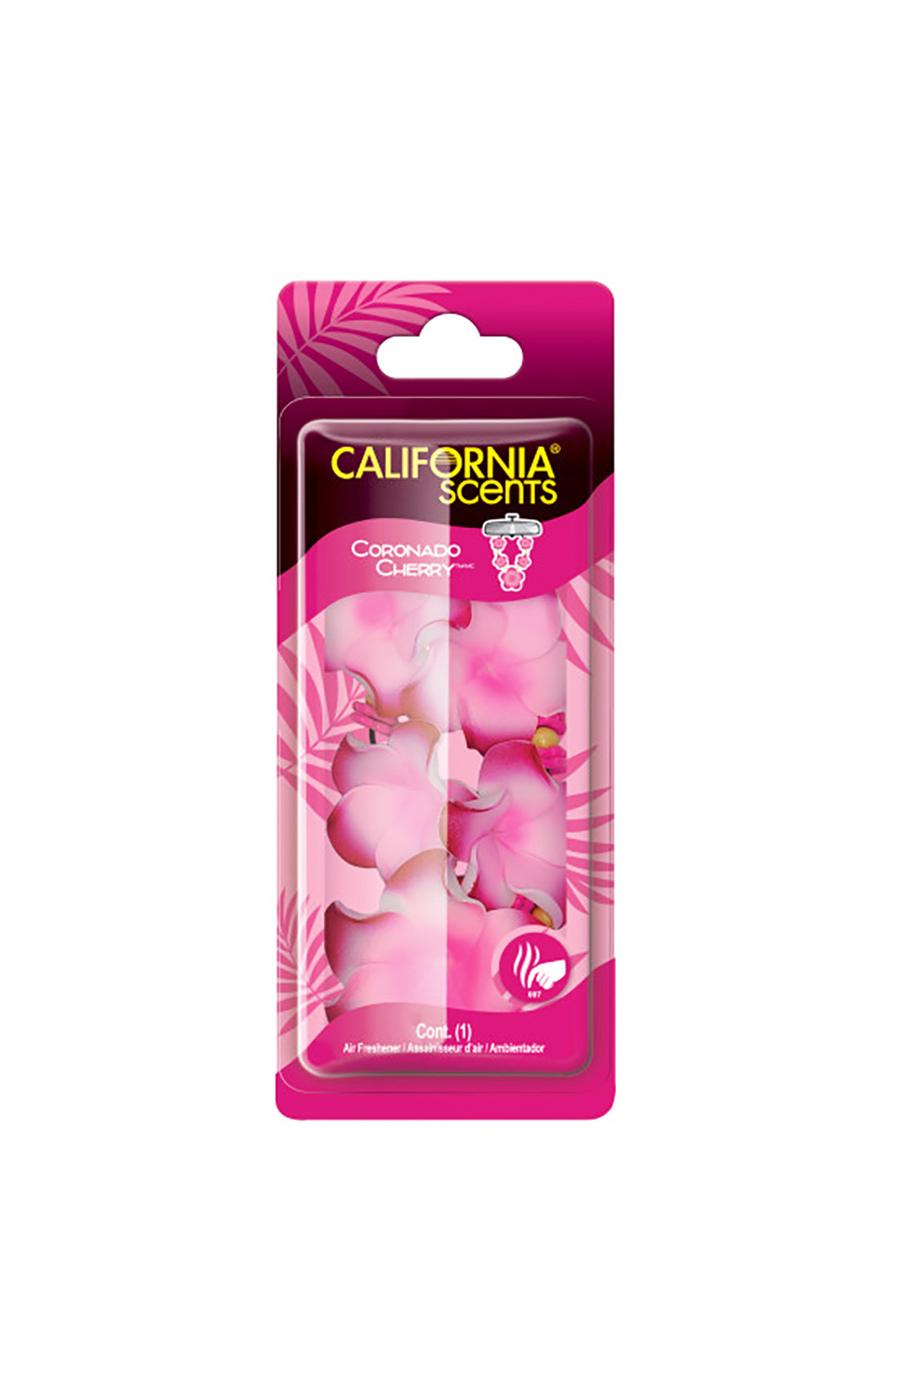  California Scents CCS-007 Air Freshener Cherry Scent, Coronado  Cherry, 12 Units : Health & Household